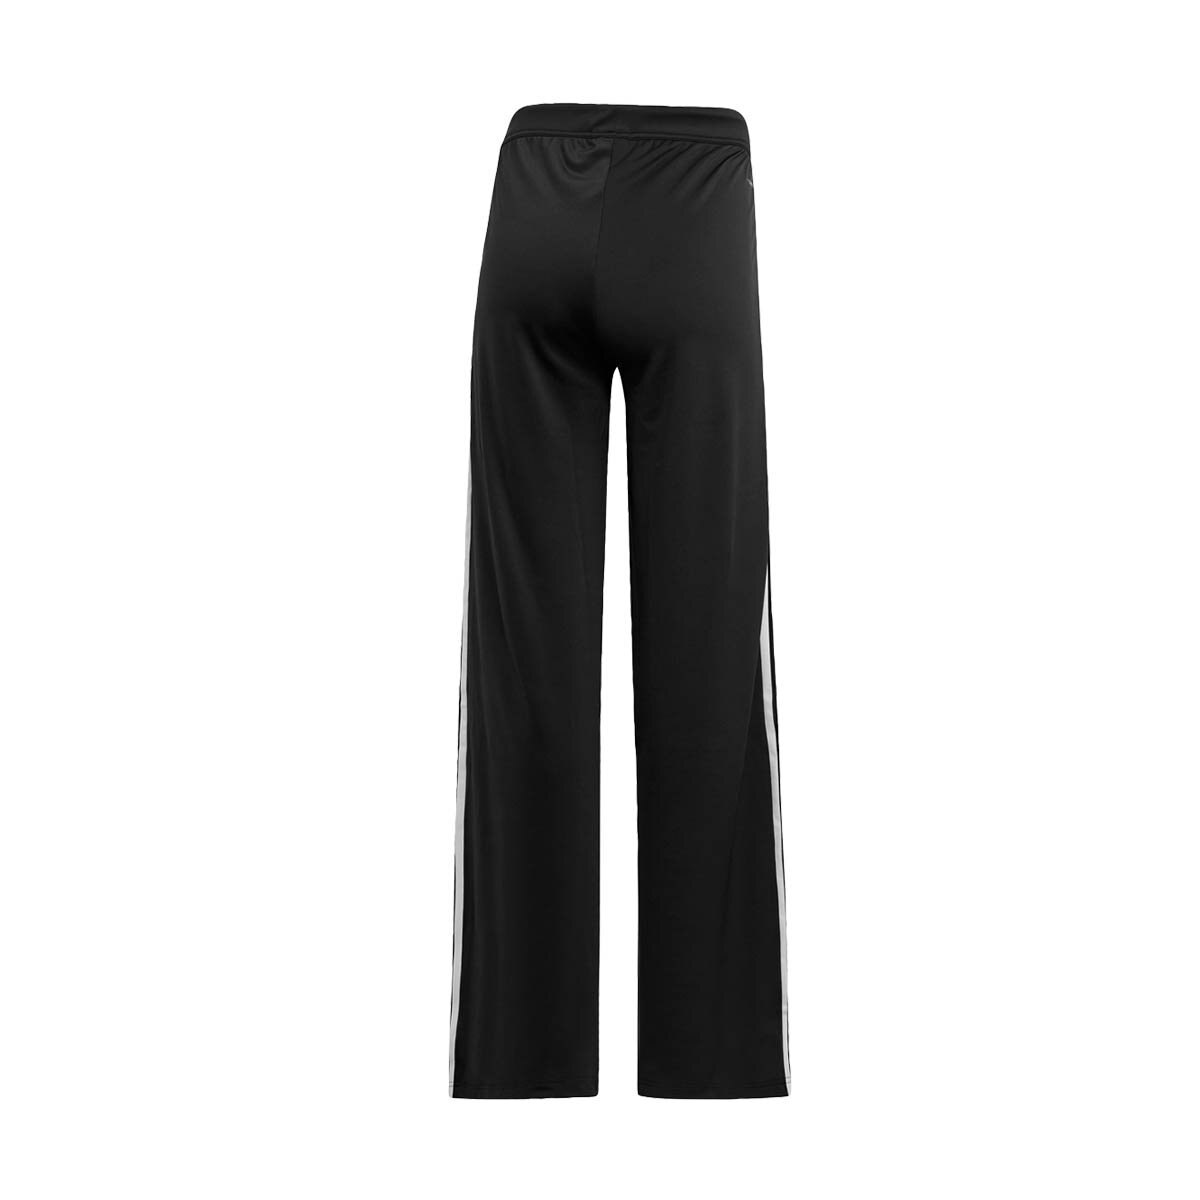 Pants negro training adidas - dama - Sears